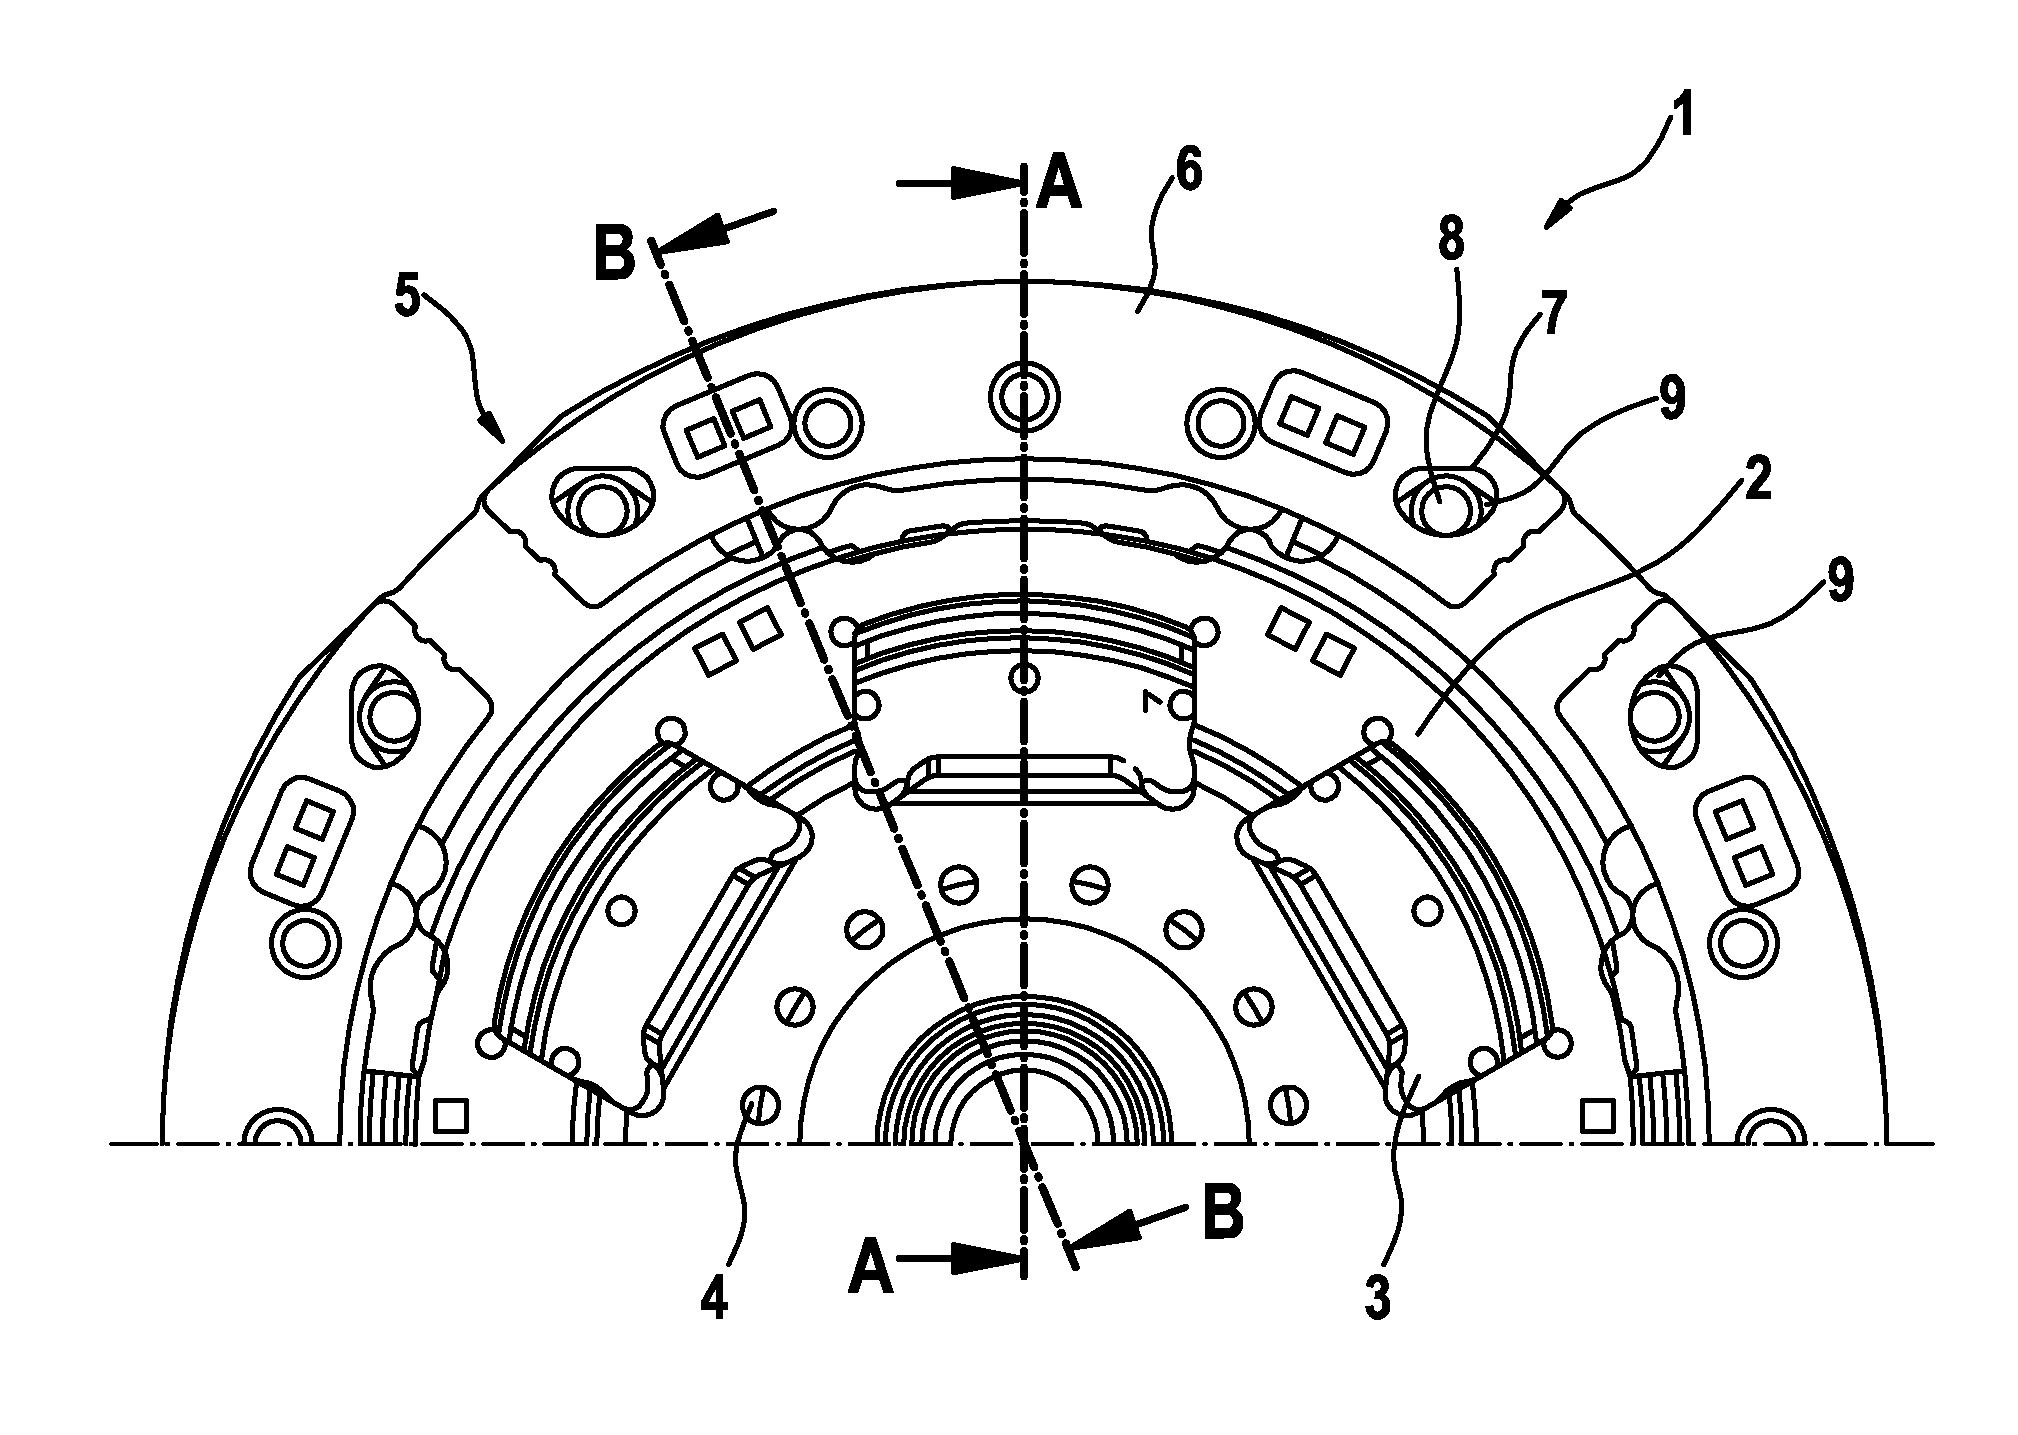 Rotary vibration damper with centrifugal force pendulum